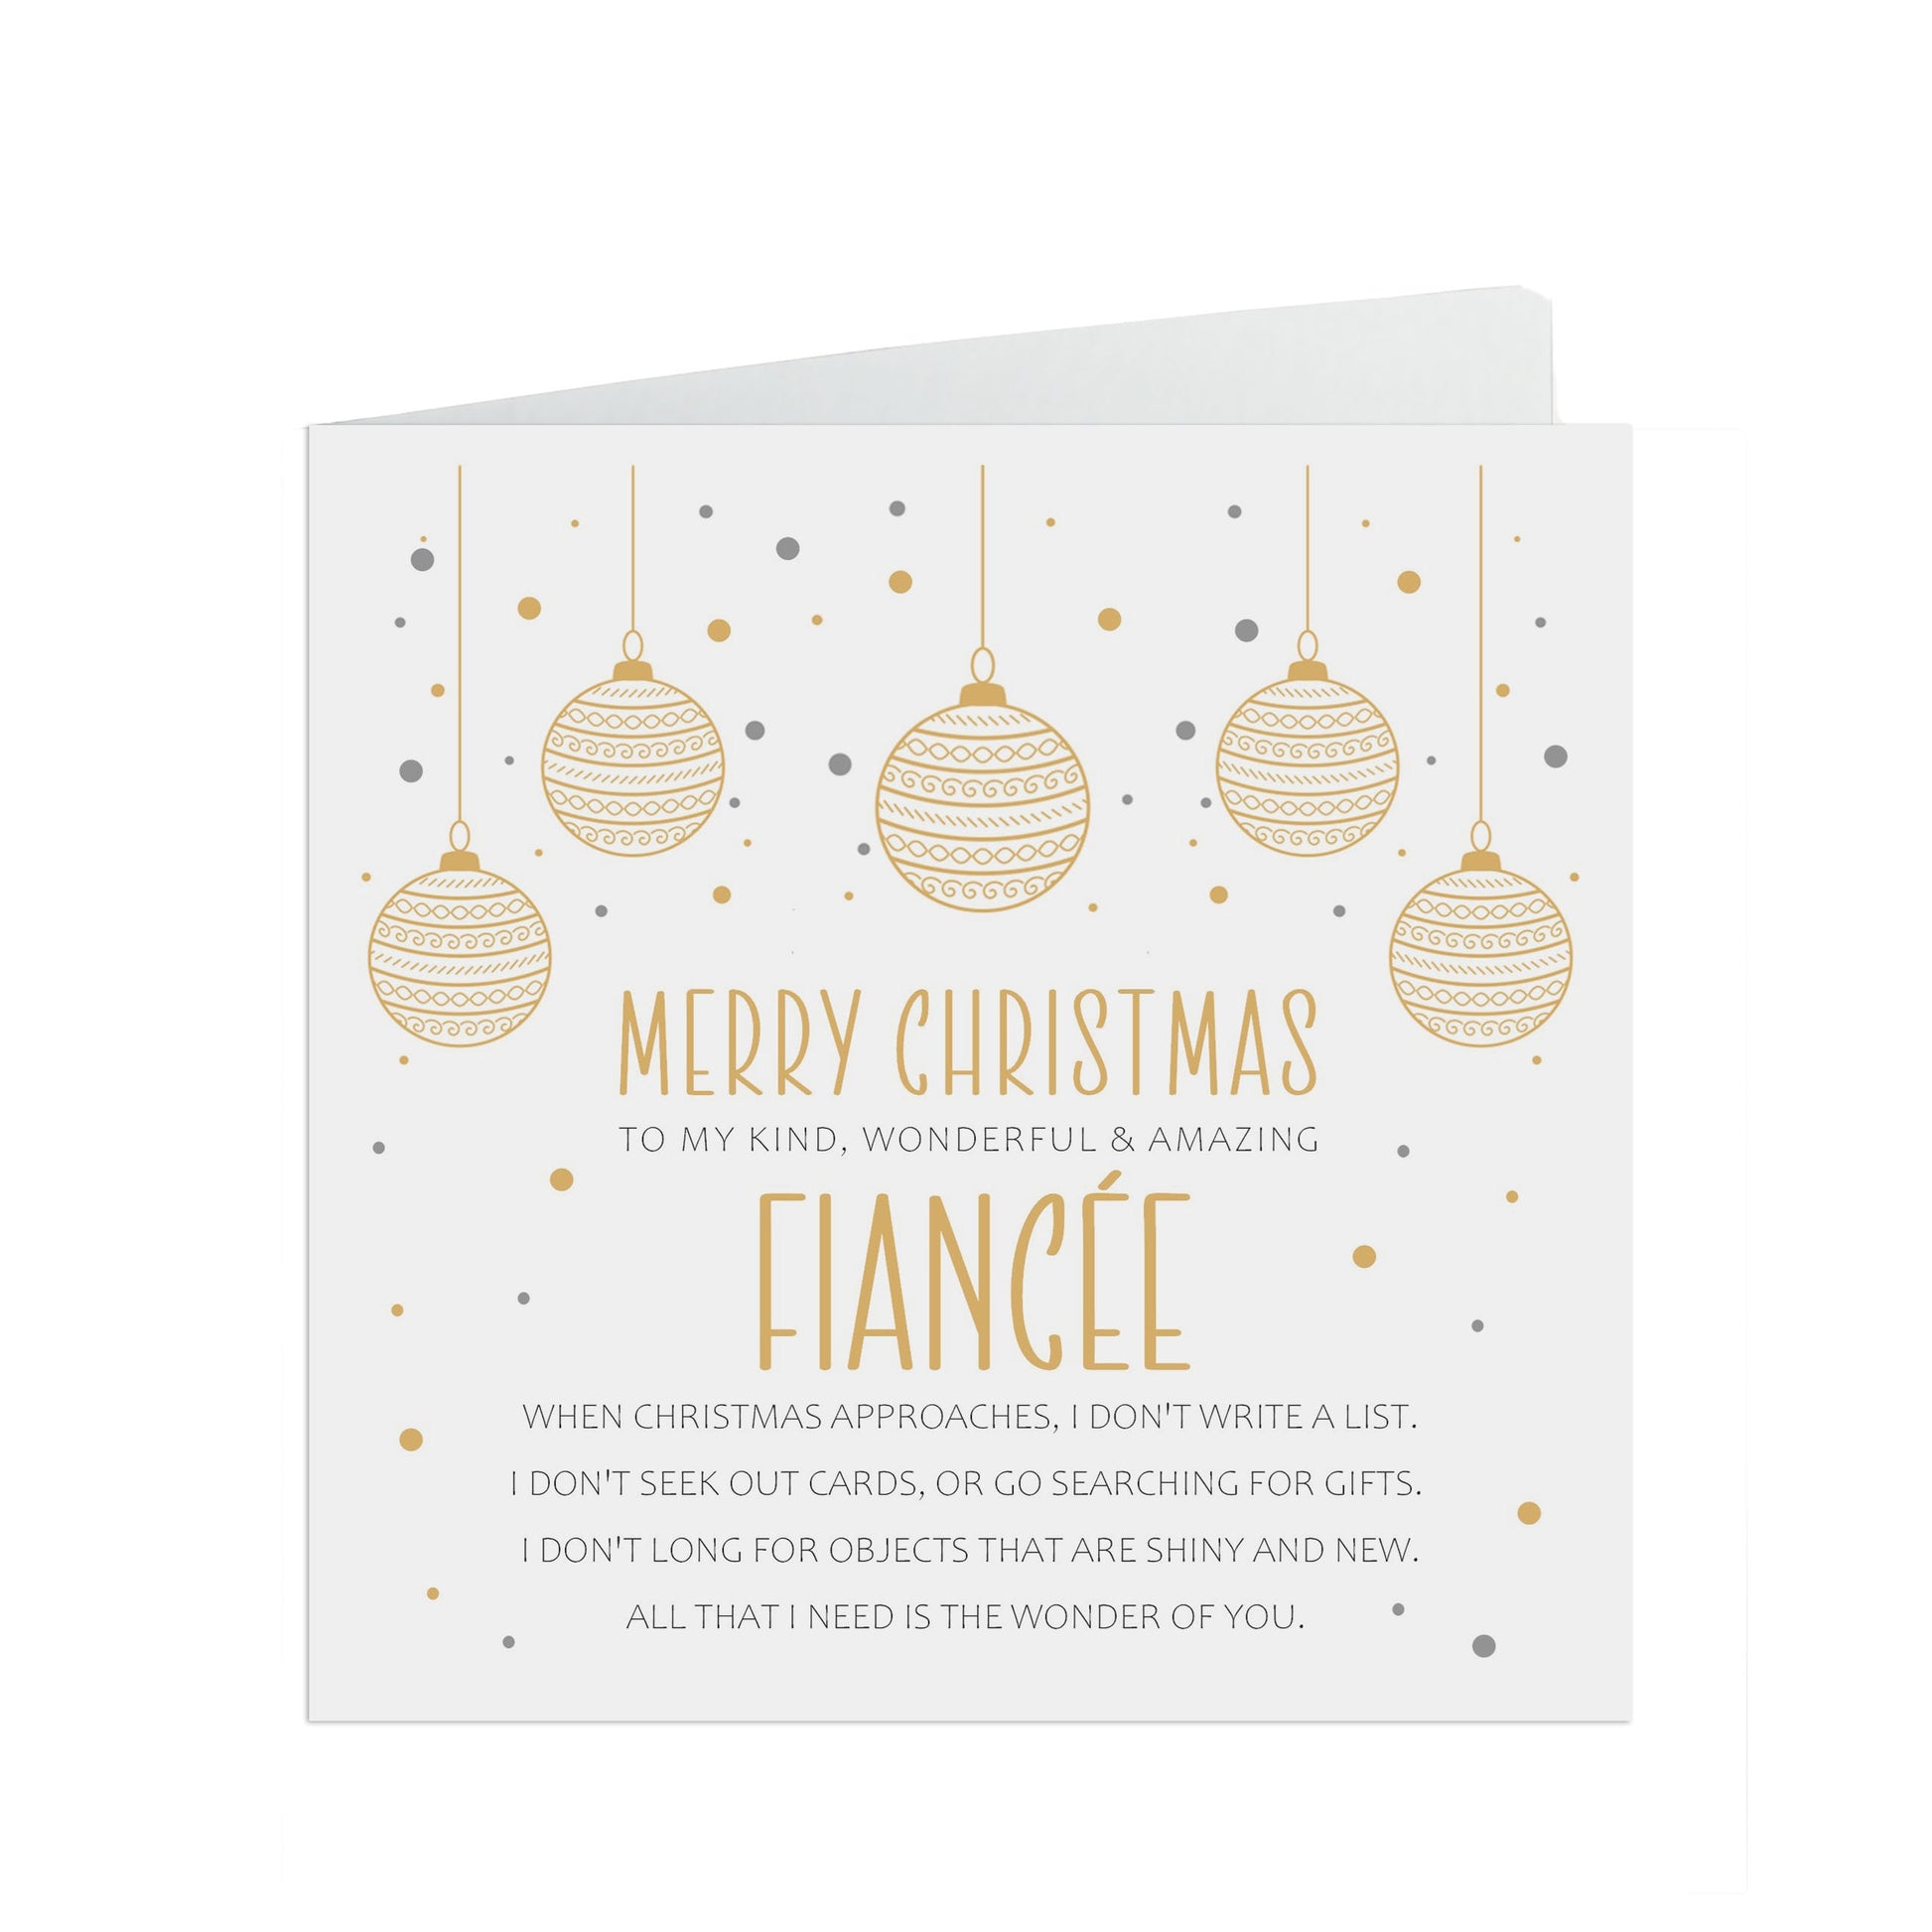 Fiancee Christmas Card, Gold Bauble Sentimental Romantic Poem